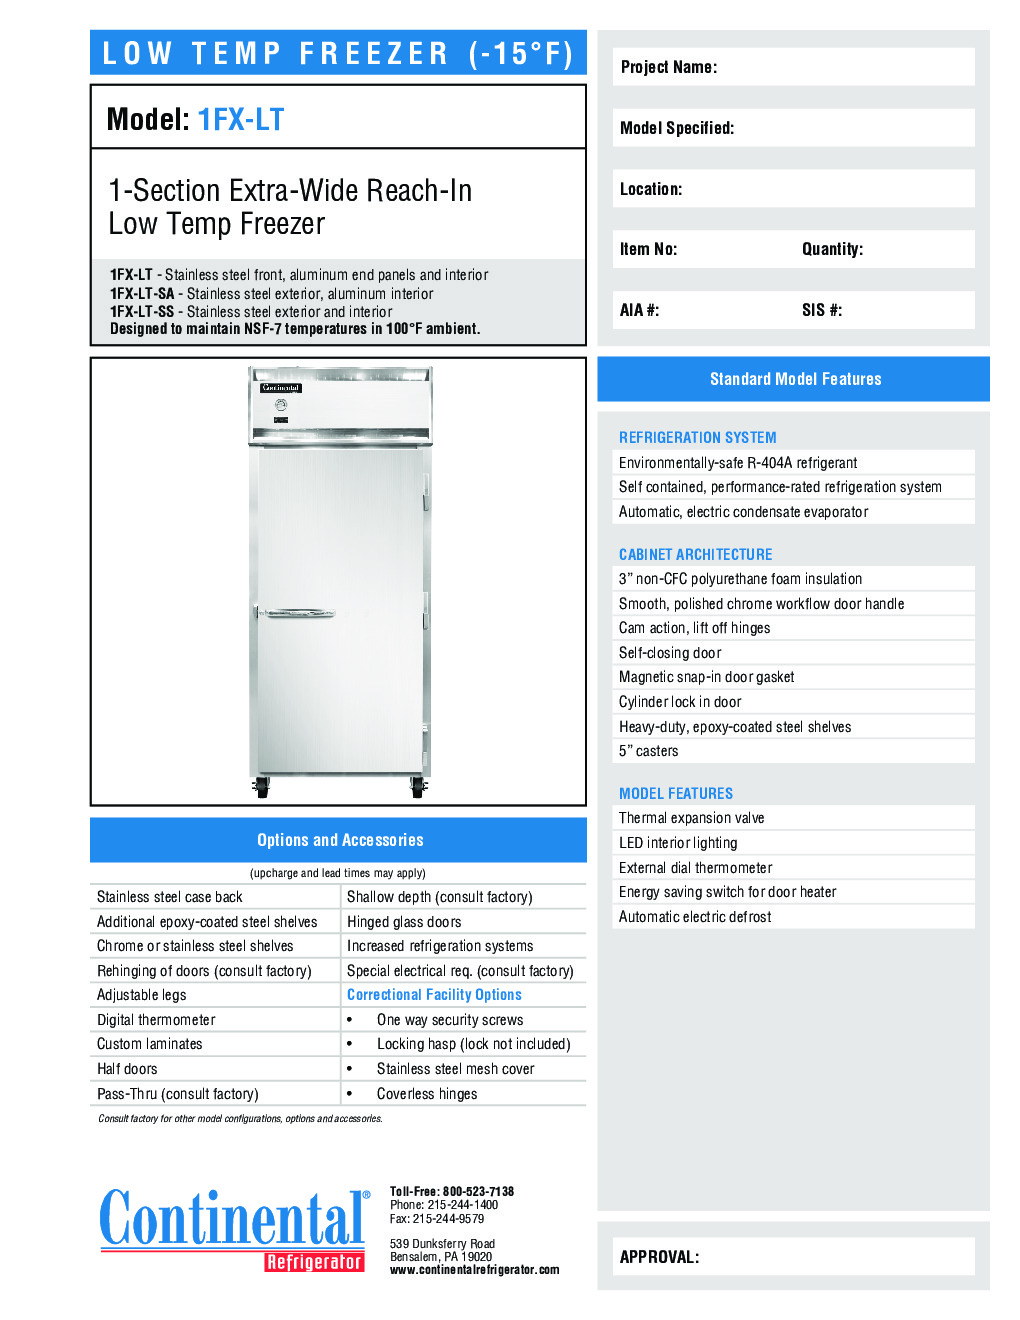 Continental Refrigerator 1FX-LT Reach-In Low Temperature Freezer